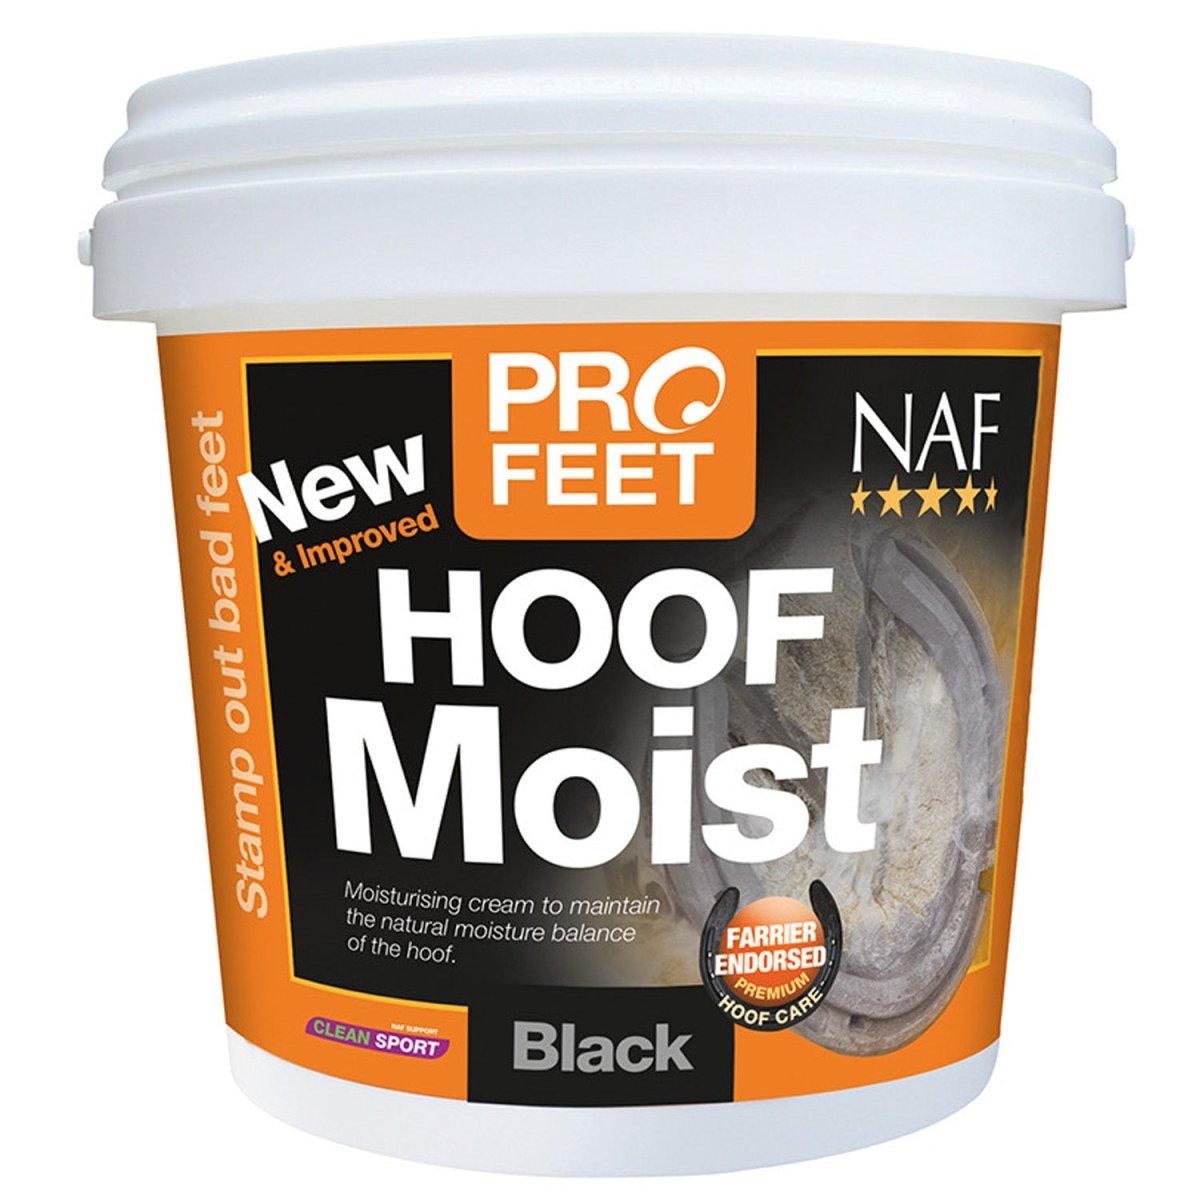 Naf Five Star Profeet Hoof Moist - Black - 900Gm